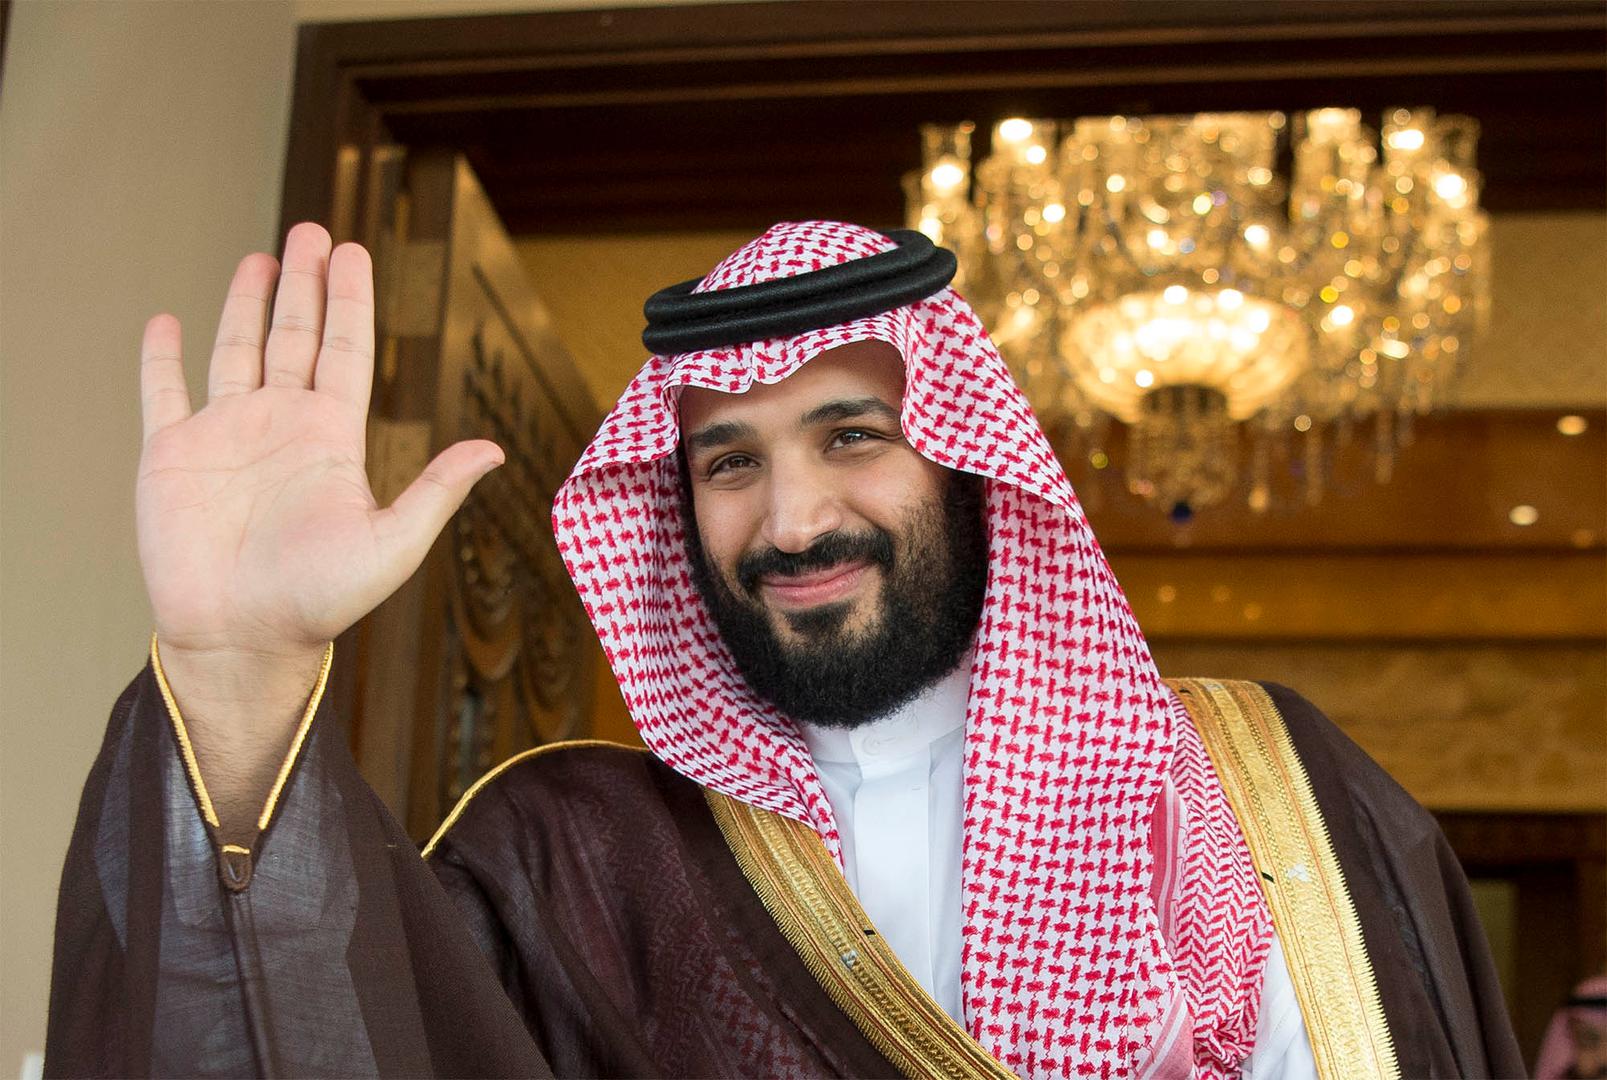 Image of Saudi Crown Prince Mohammad Bin Salman waving his hand.